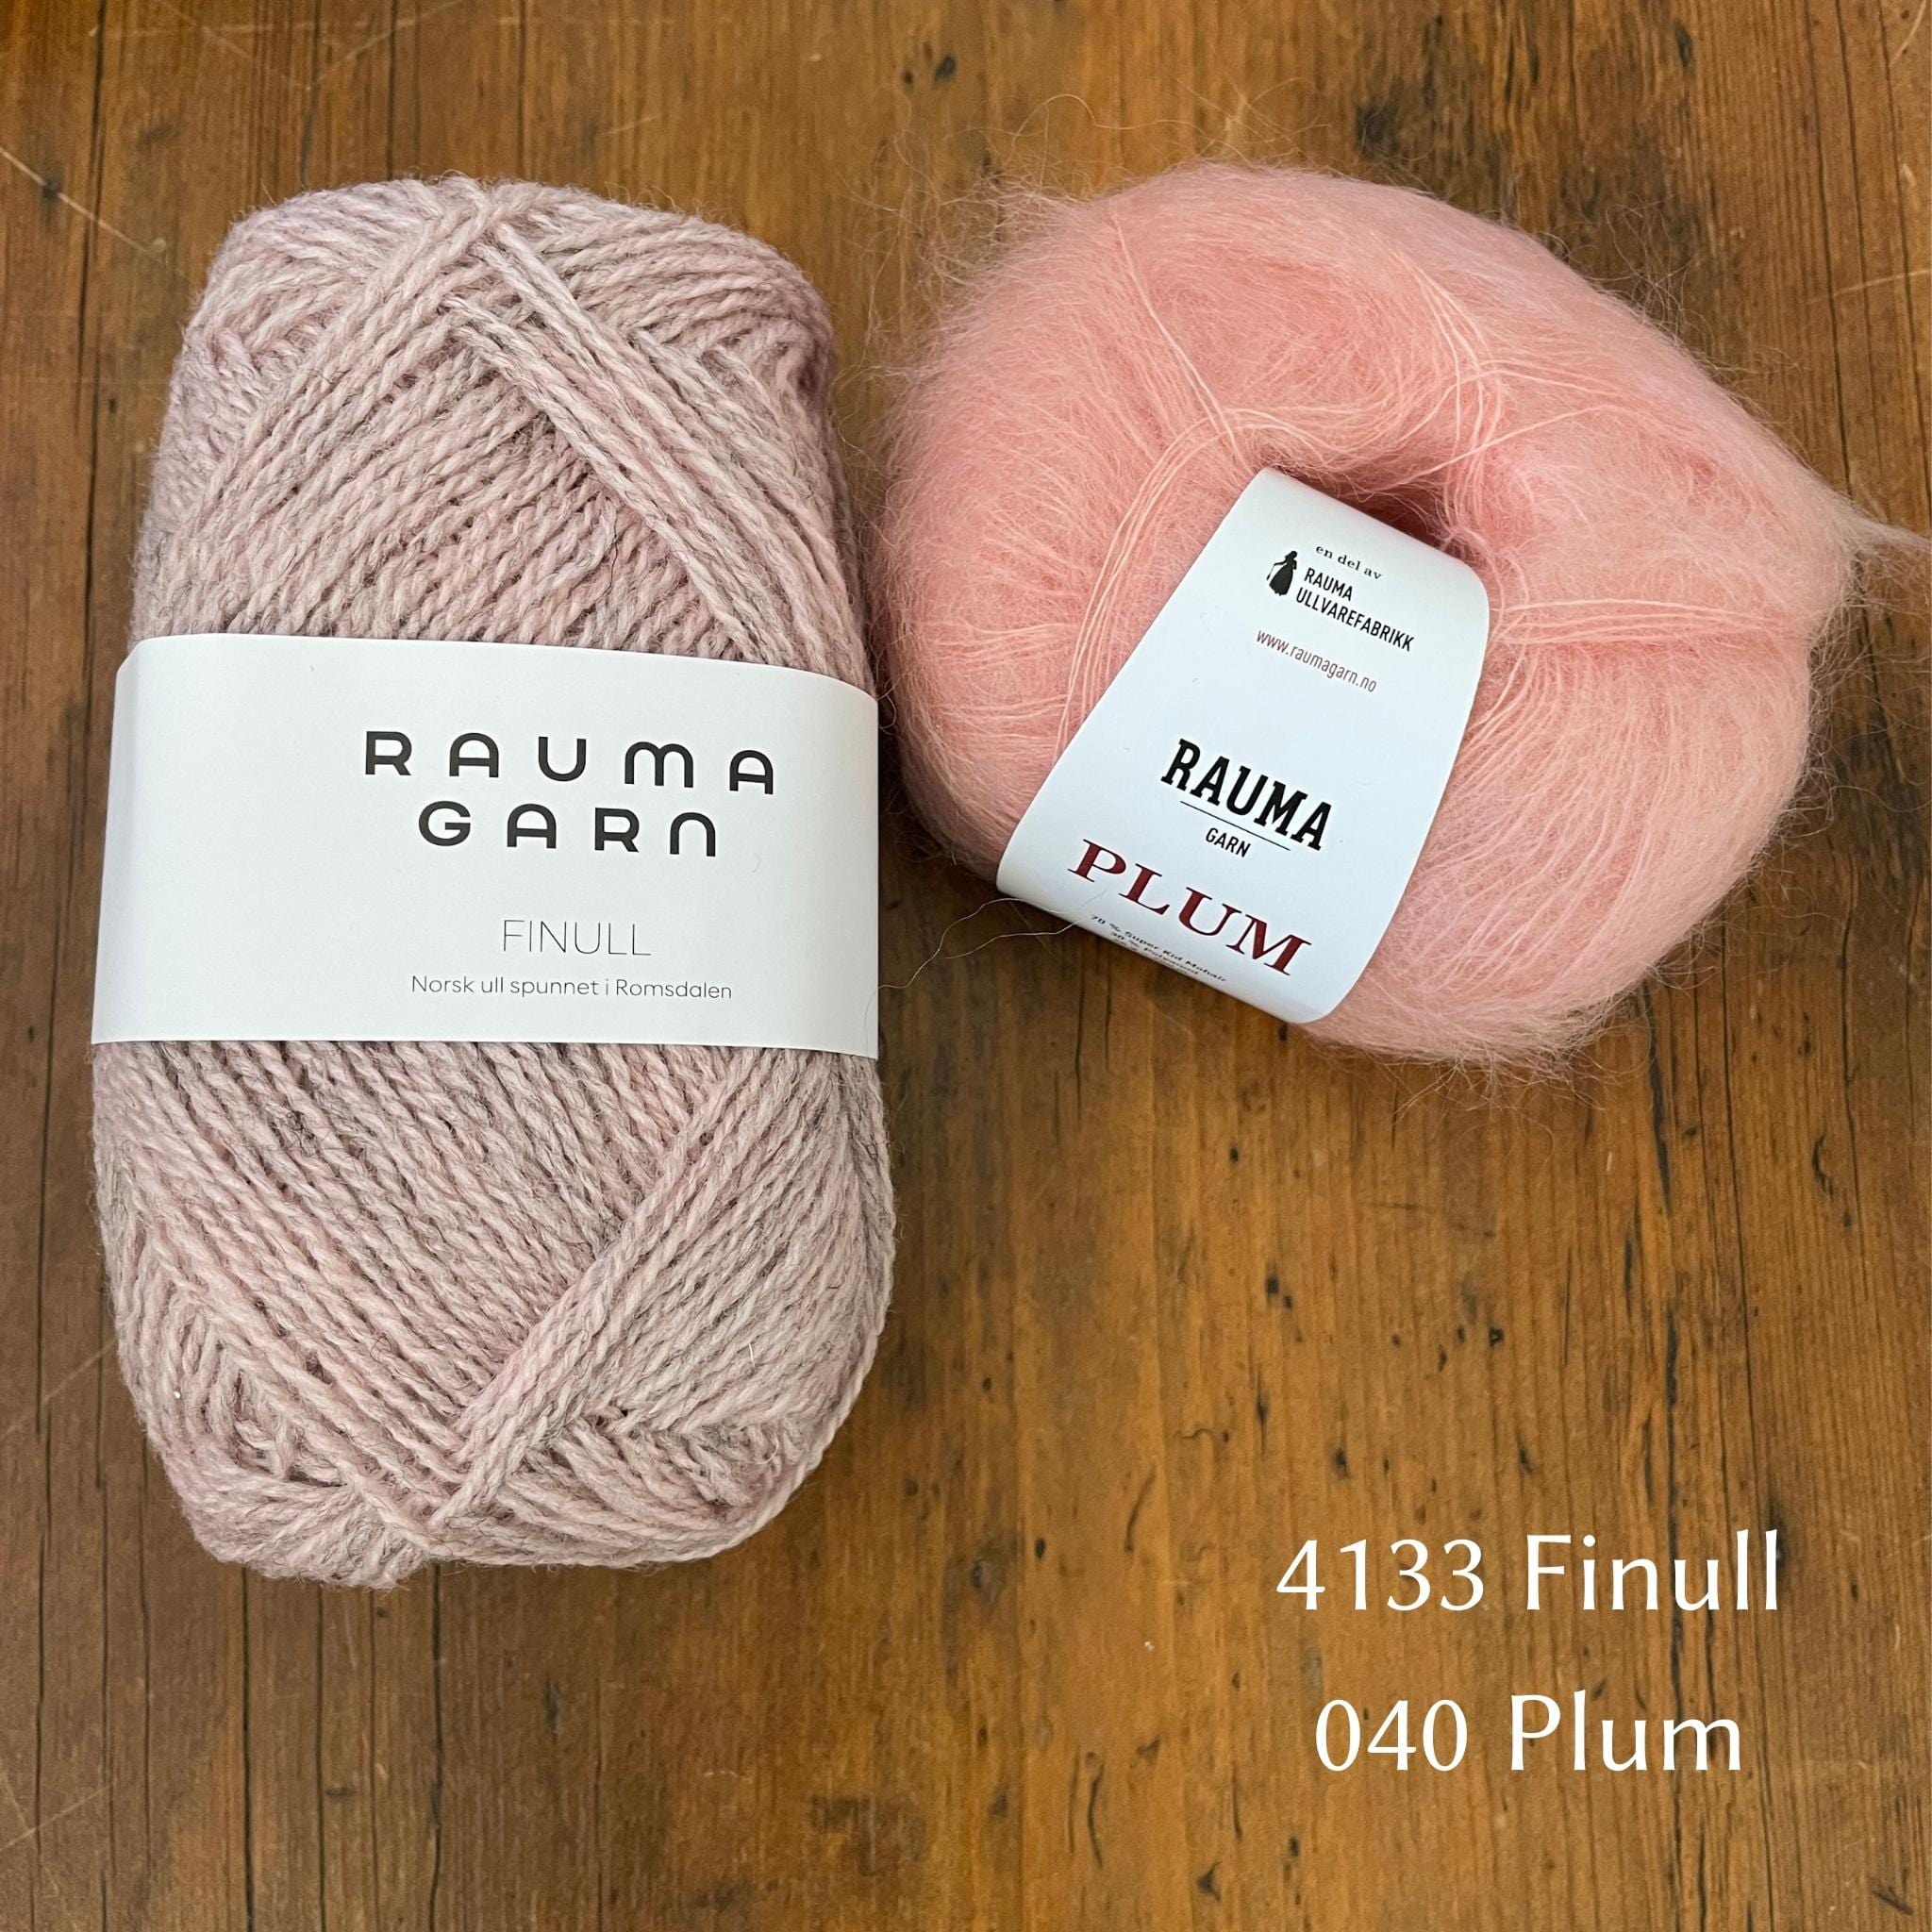 Ball of Rauma Finullgarn yarn in heathered light pink with coordinating Plum yarn 